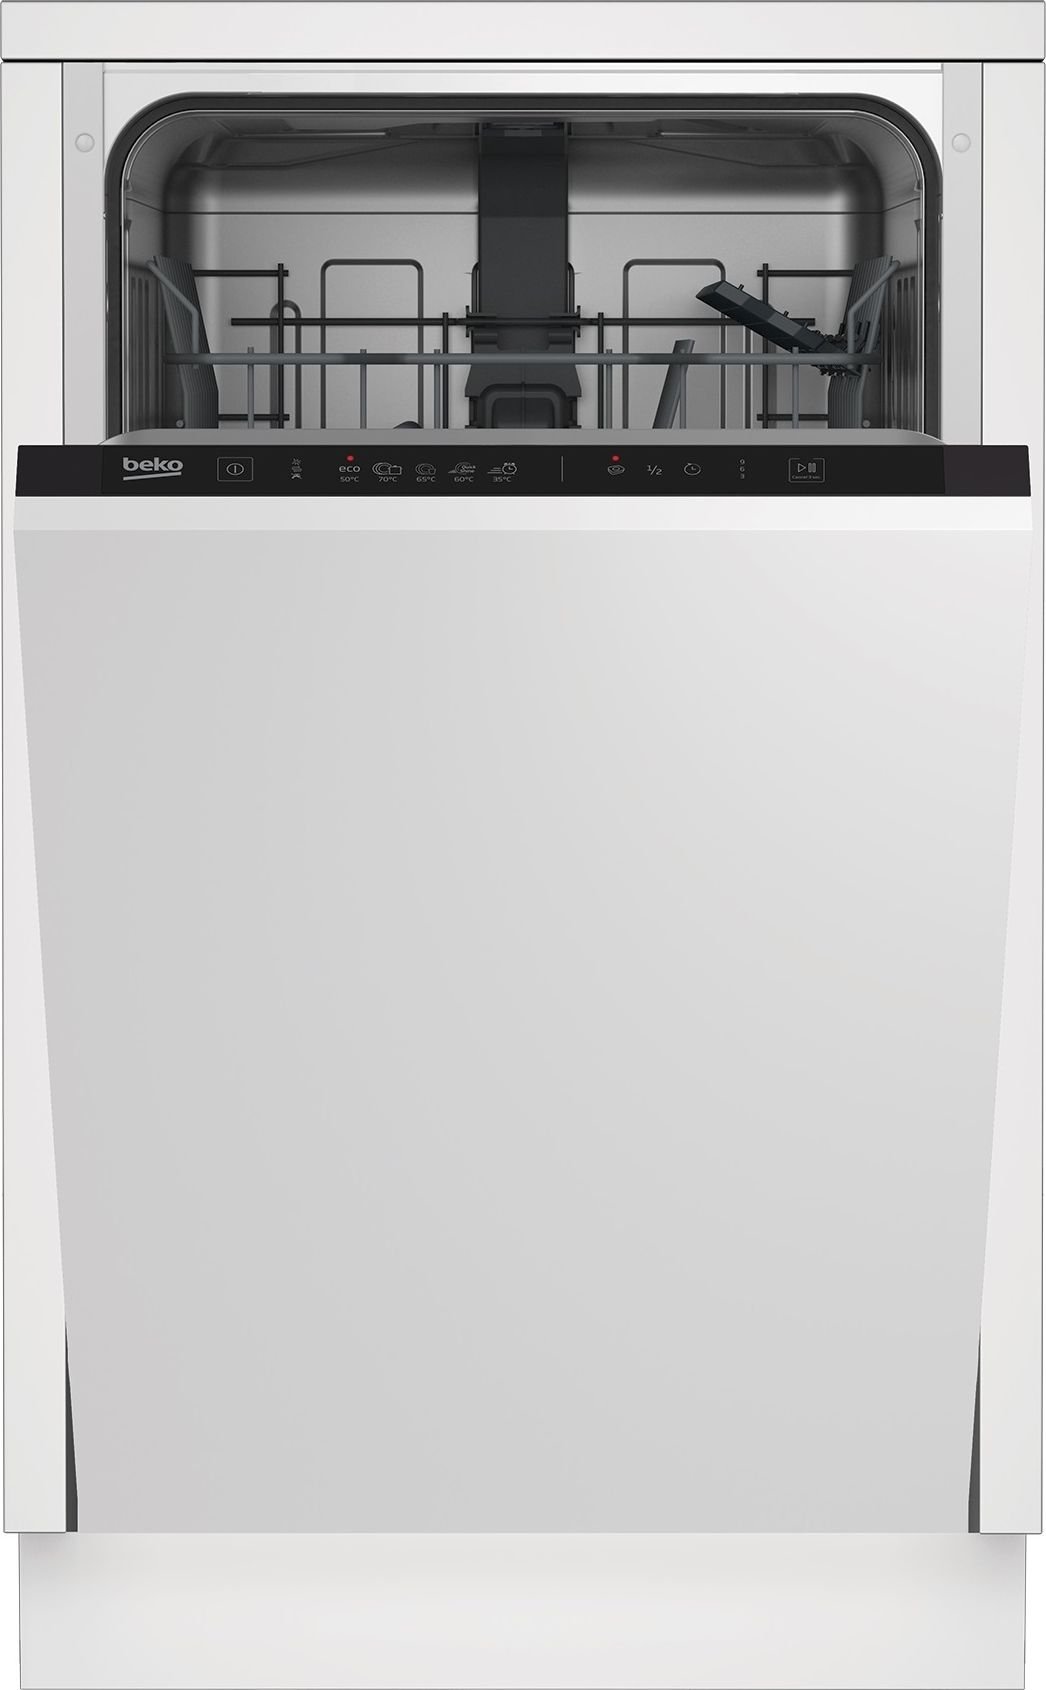 Masini de spalat vase incorporabile - Mașina de spălat vase incorporabila  Beko DIS35025,
10 seturi,
48 dB